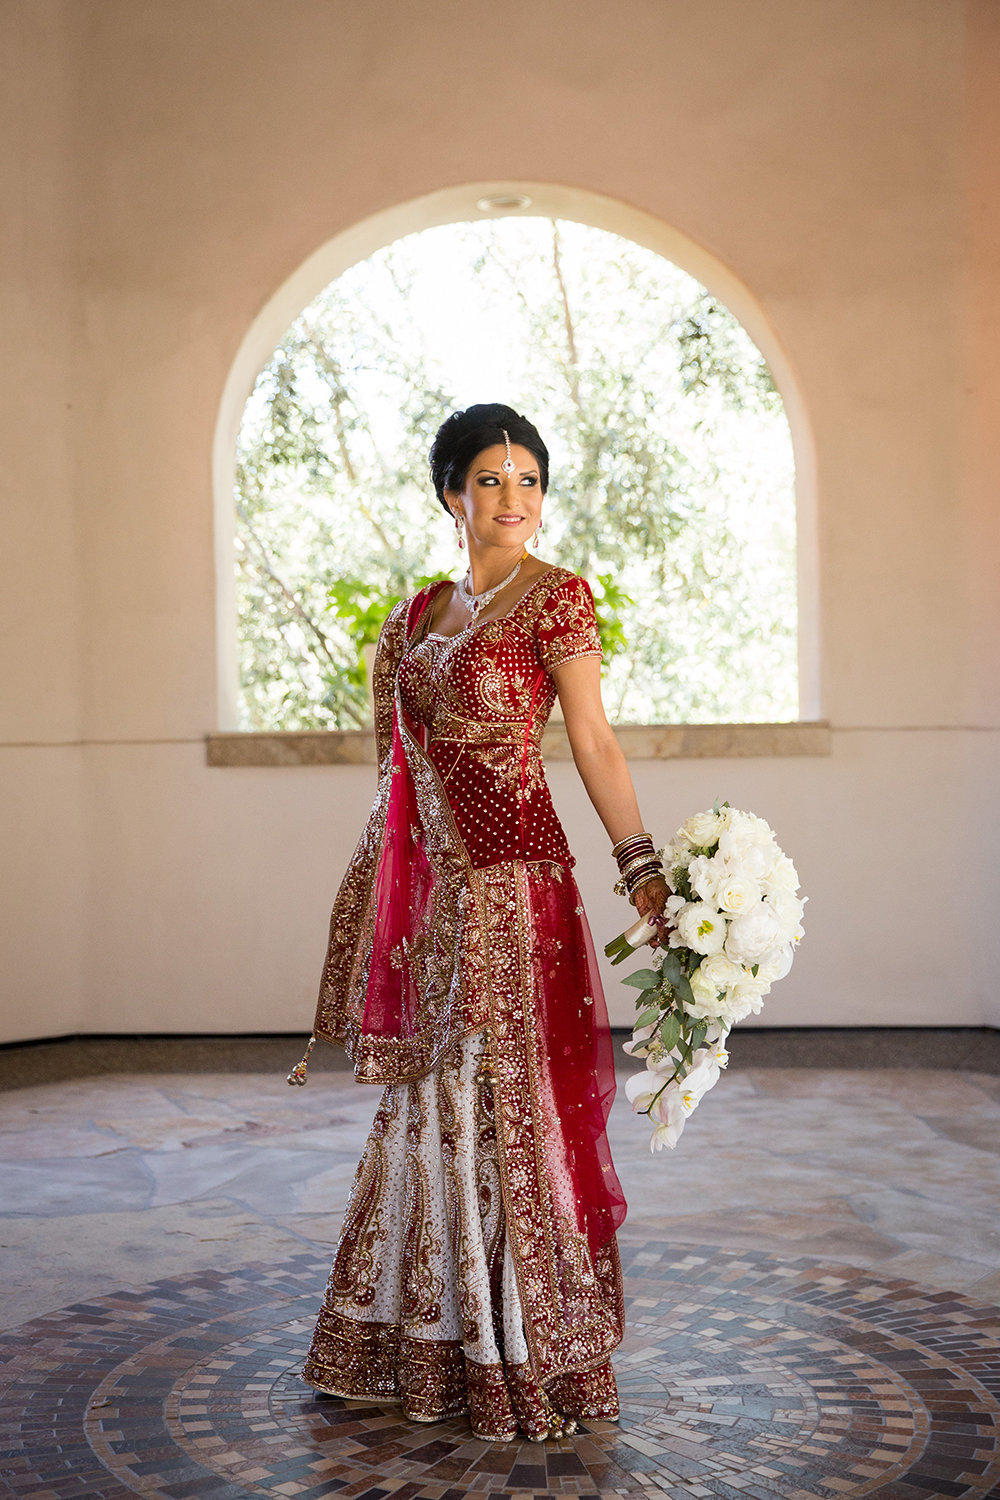 Stunning Hindu Bridal Portrait in a Lovely Sari at an  Indian Wedding at Rancho Bernardo Inn